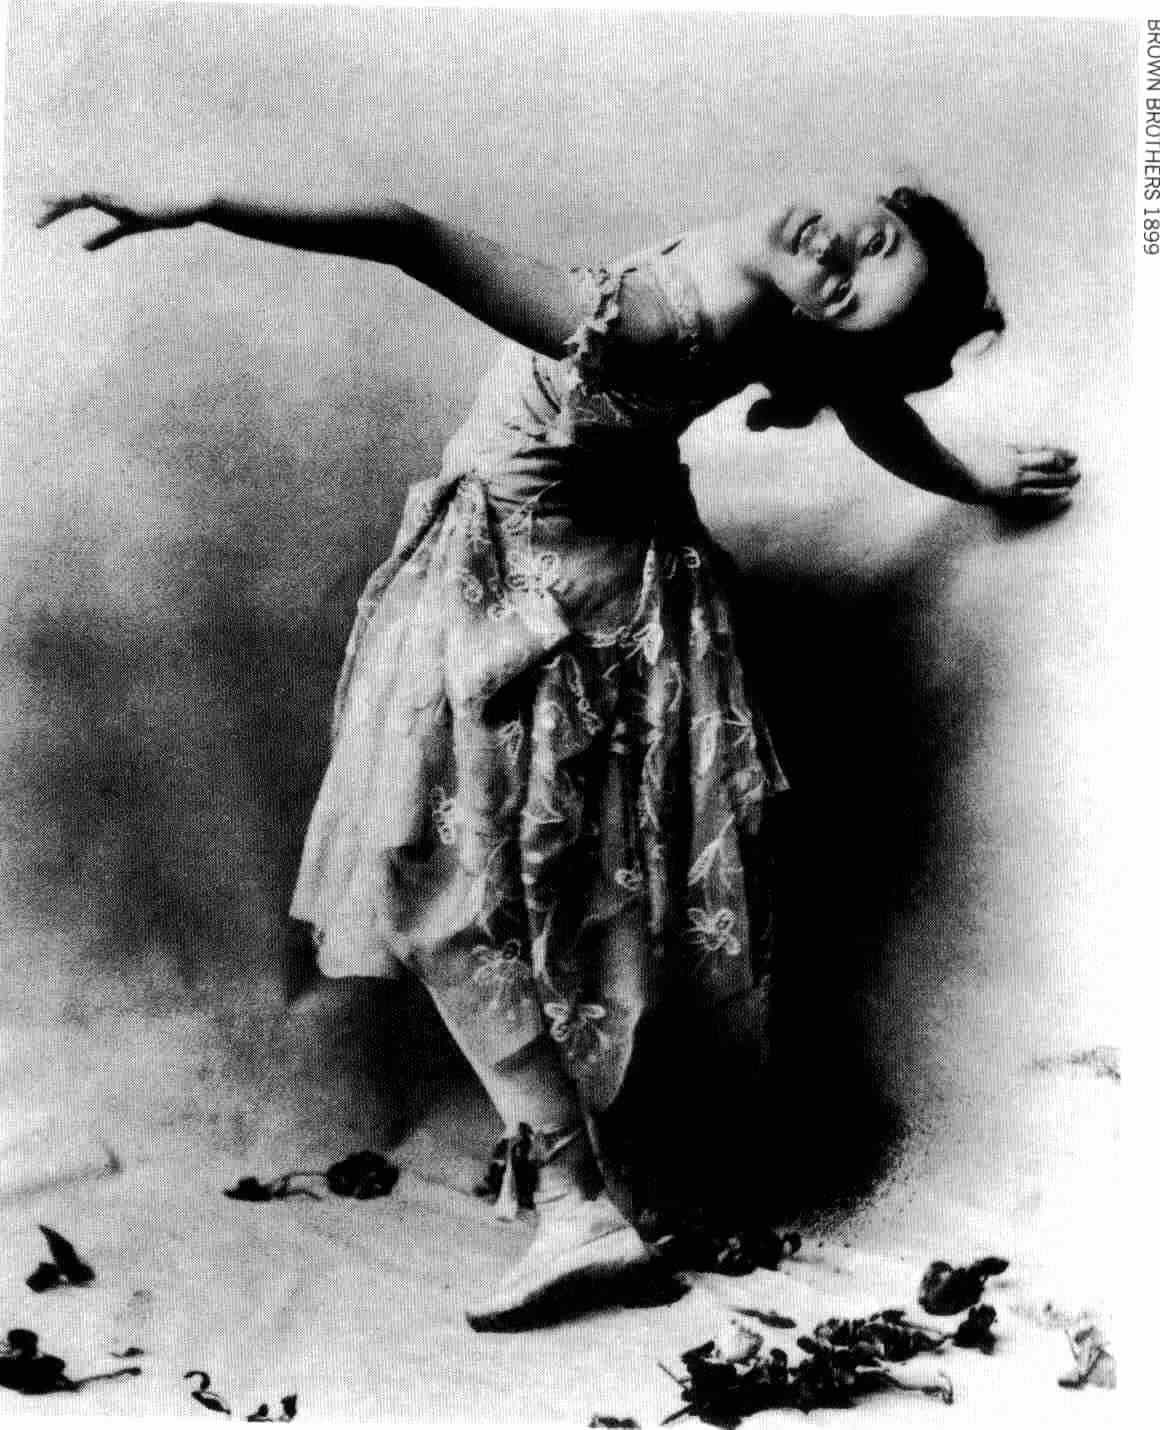 Isadora Duncan, 1878-1927